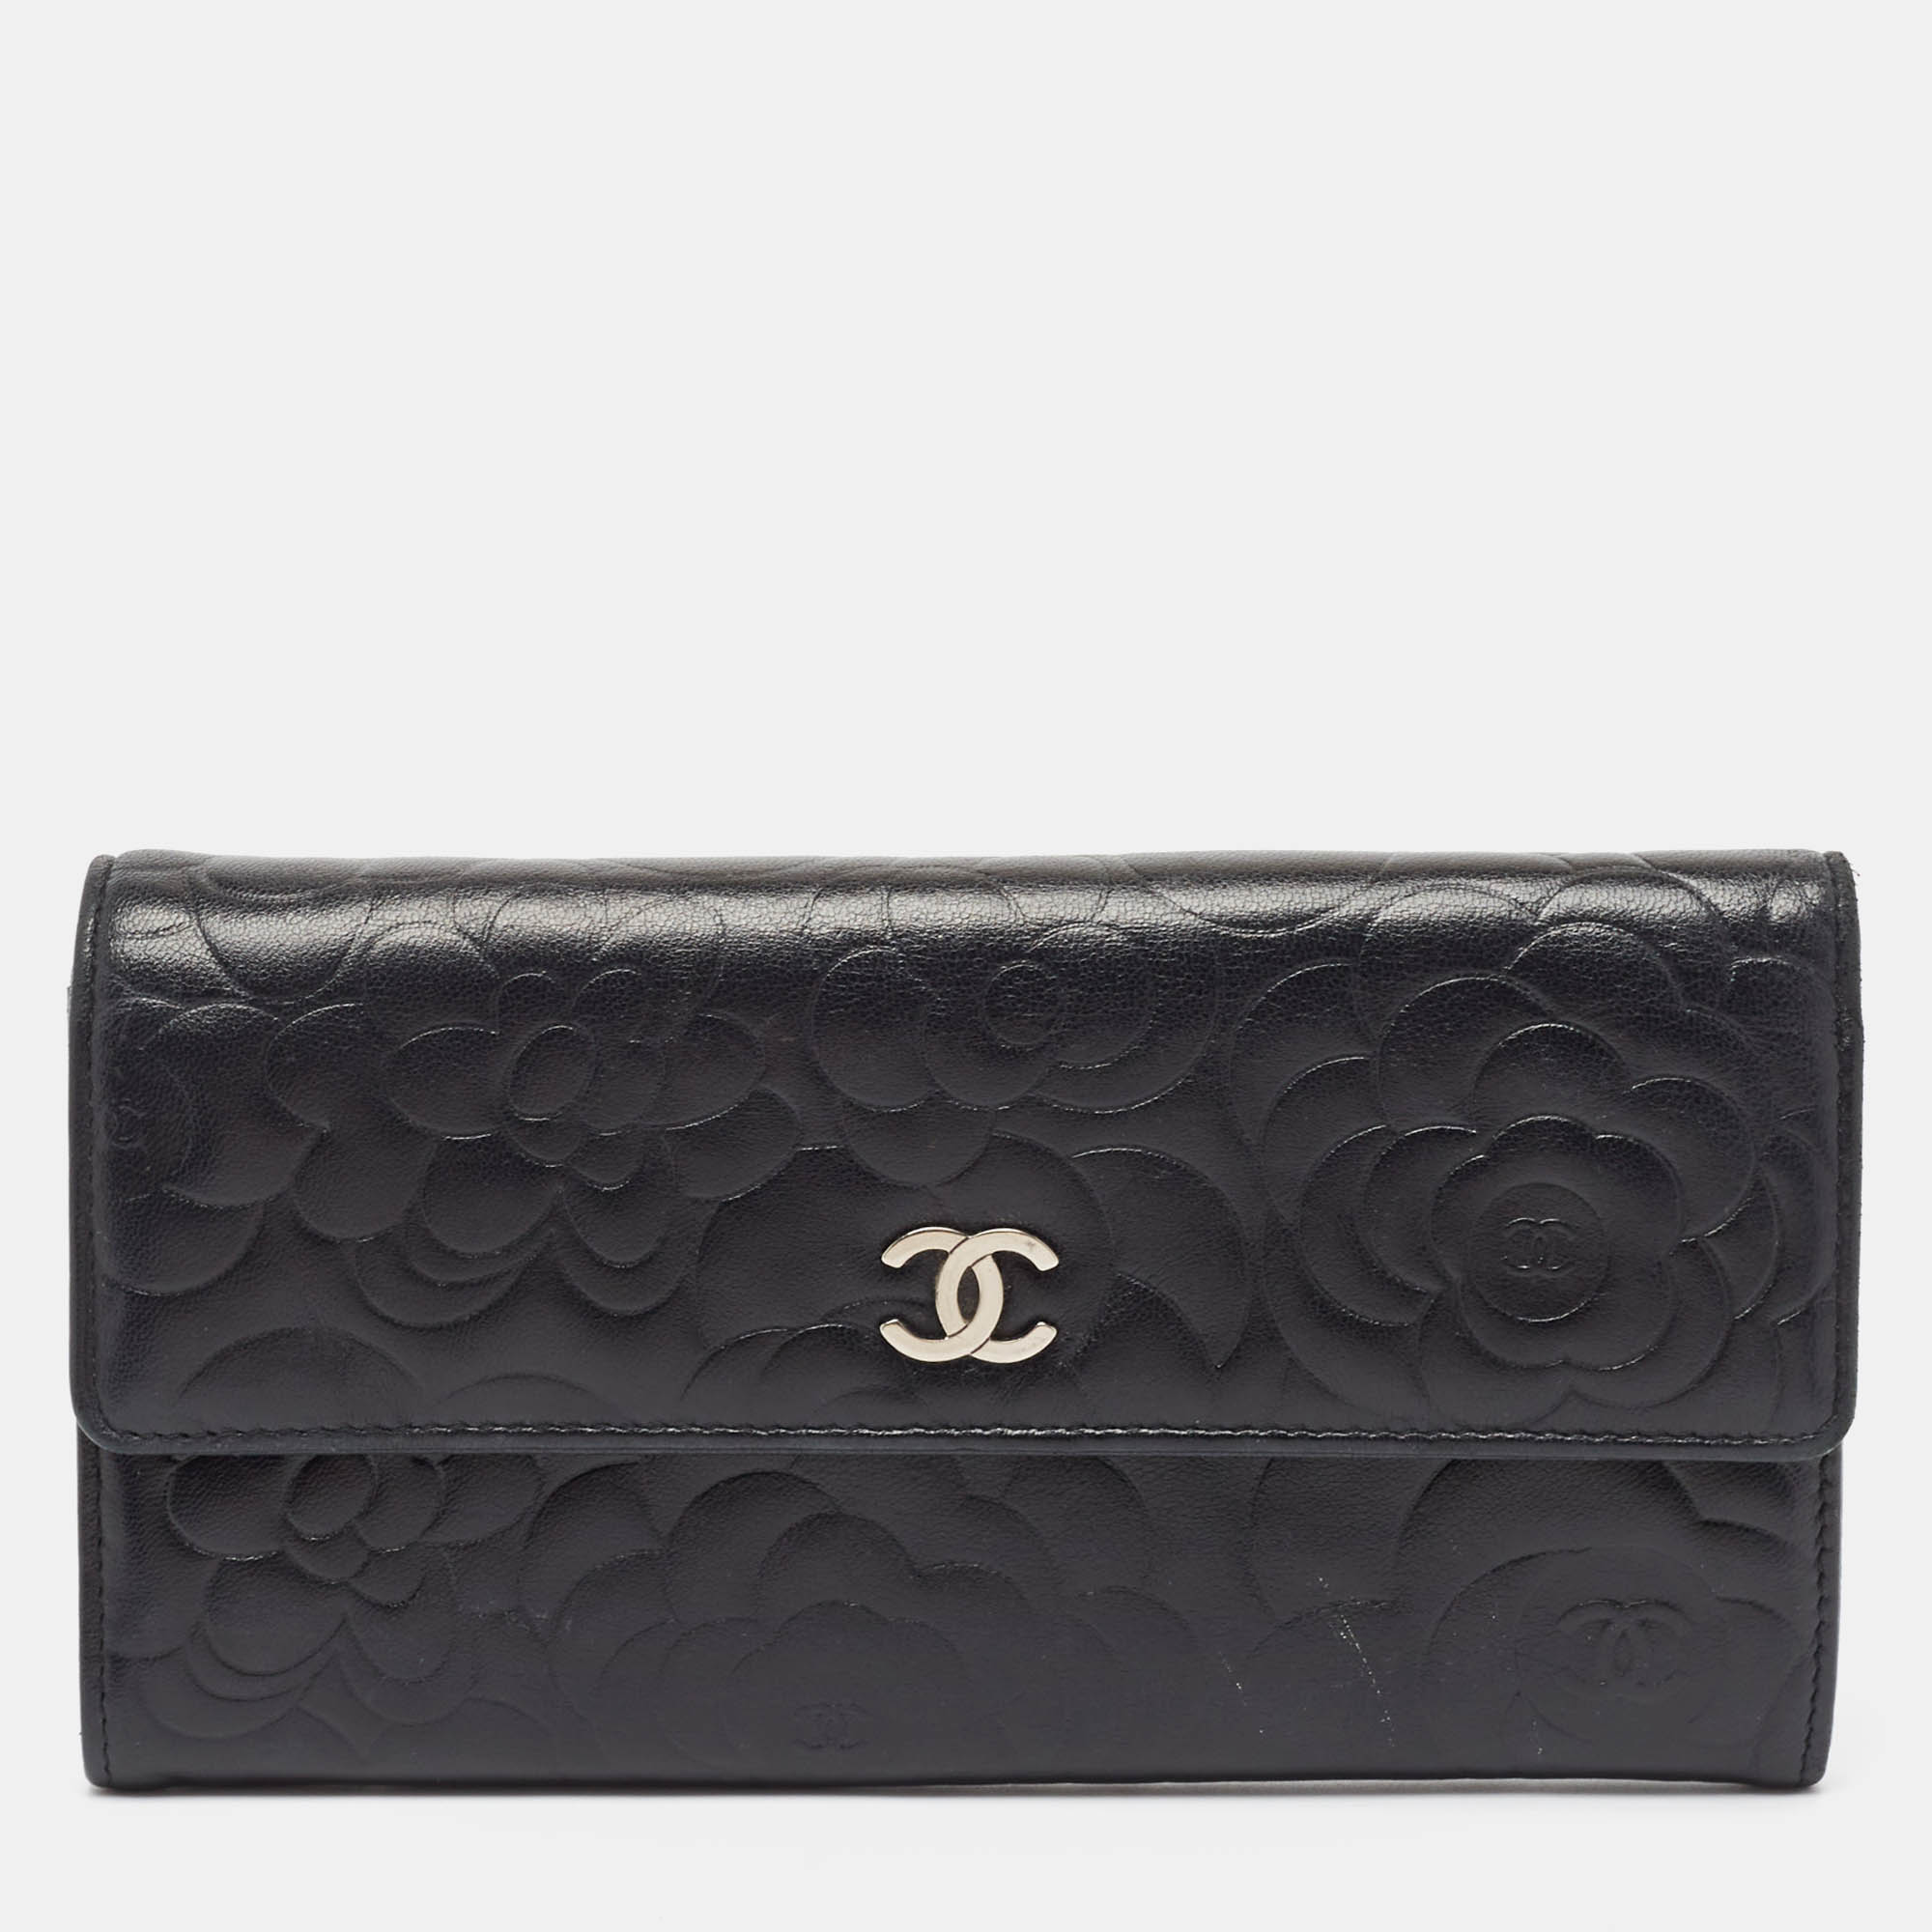 

Chanel Black Camellia Embossed Leather Large Flap Wallet